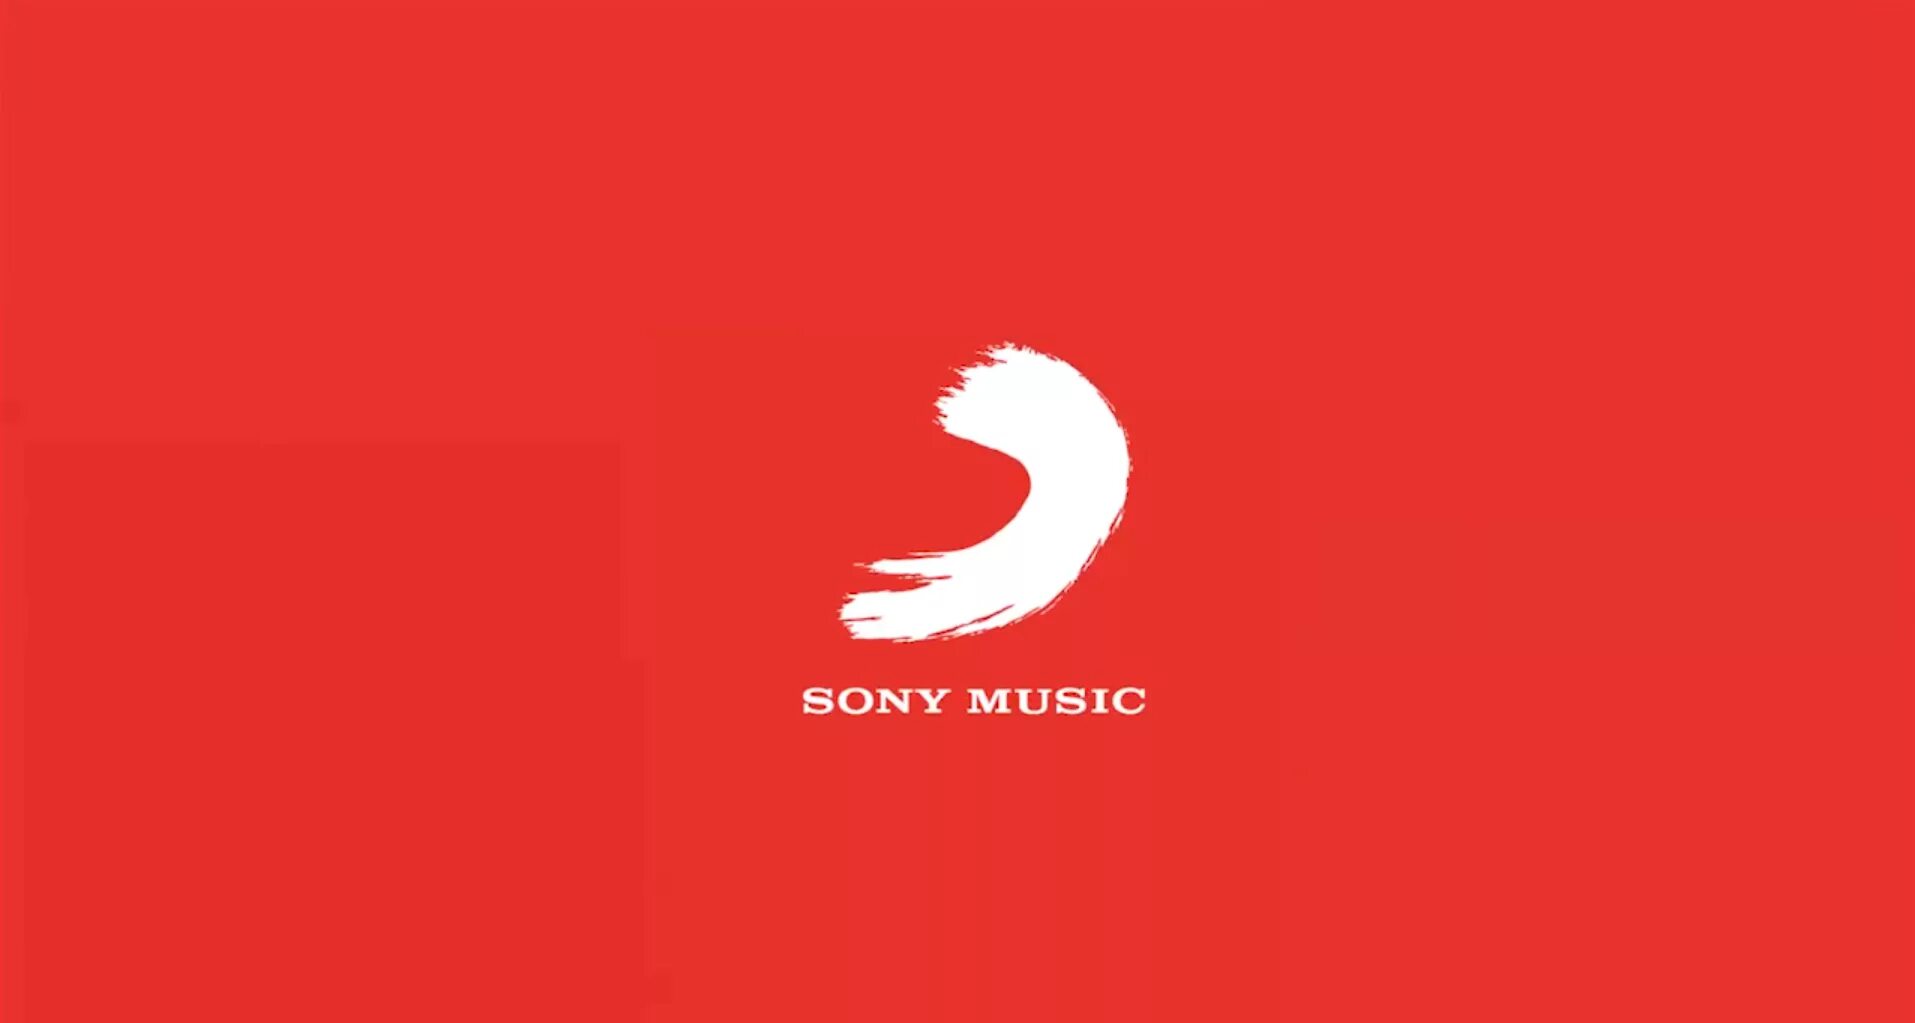 S one music. Sony Music. Логотип Sony Music. Sony Music Russia. Sony Music Entertainment Russia лейбл.